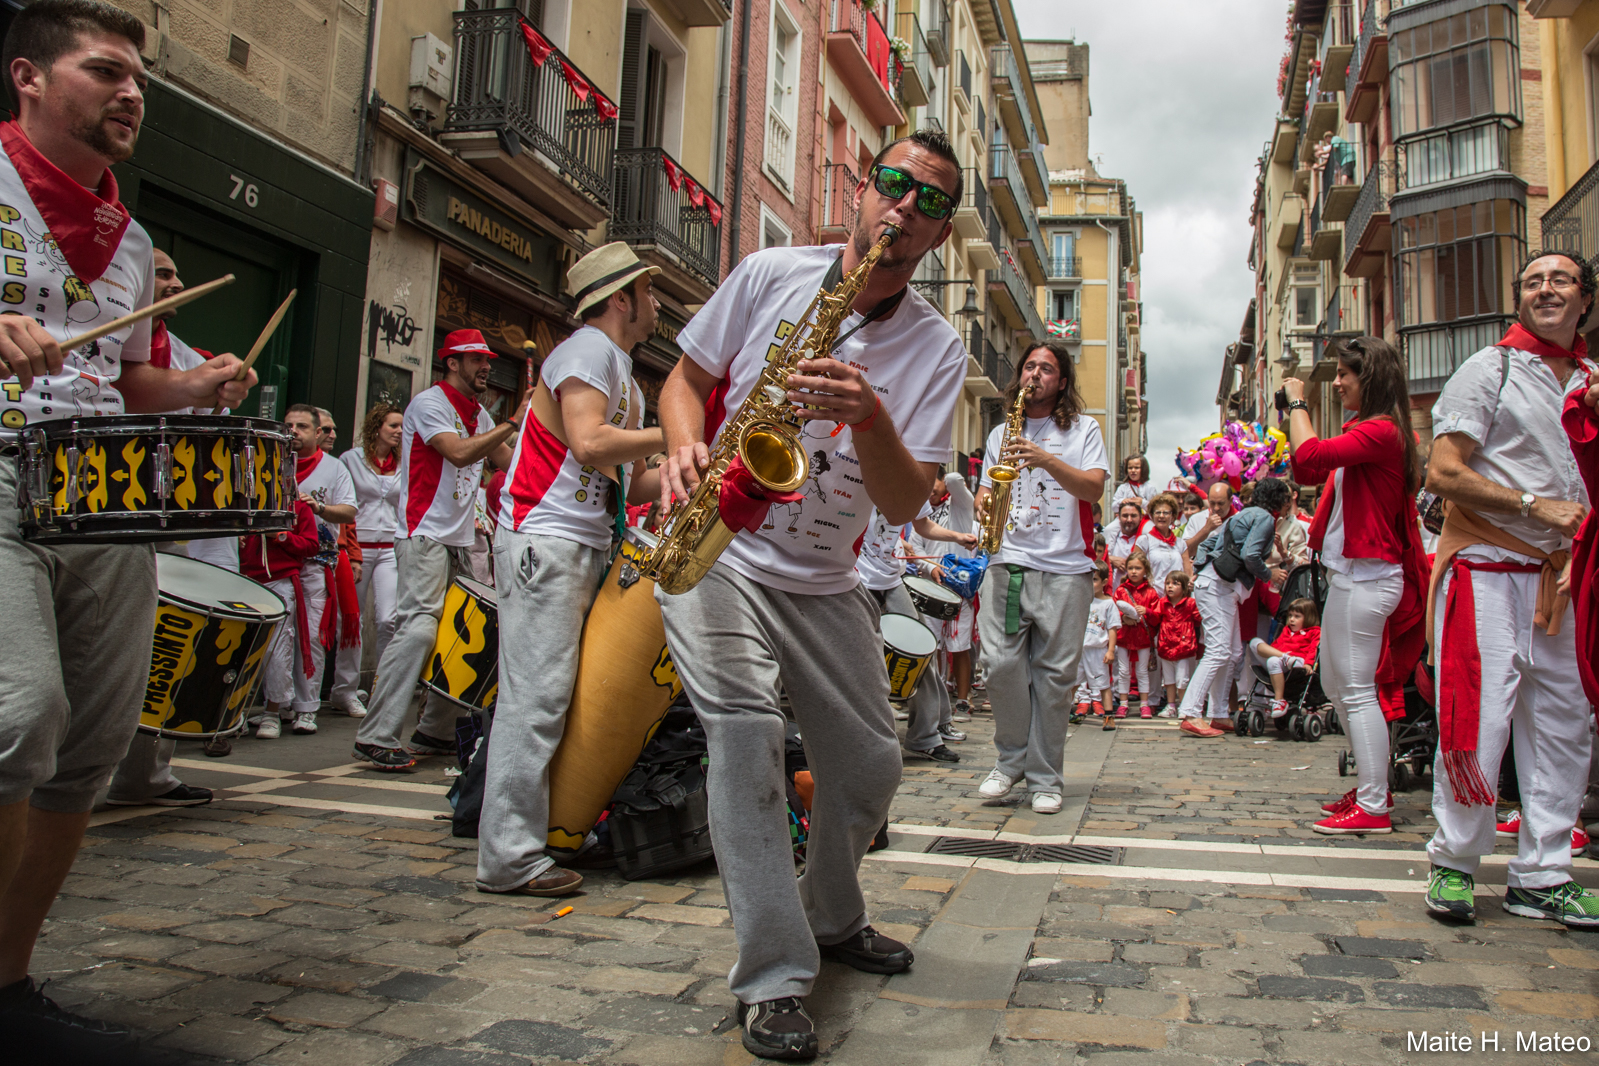 Banda de música tocando por la calle en San Fermín in Pamplona.